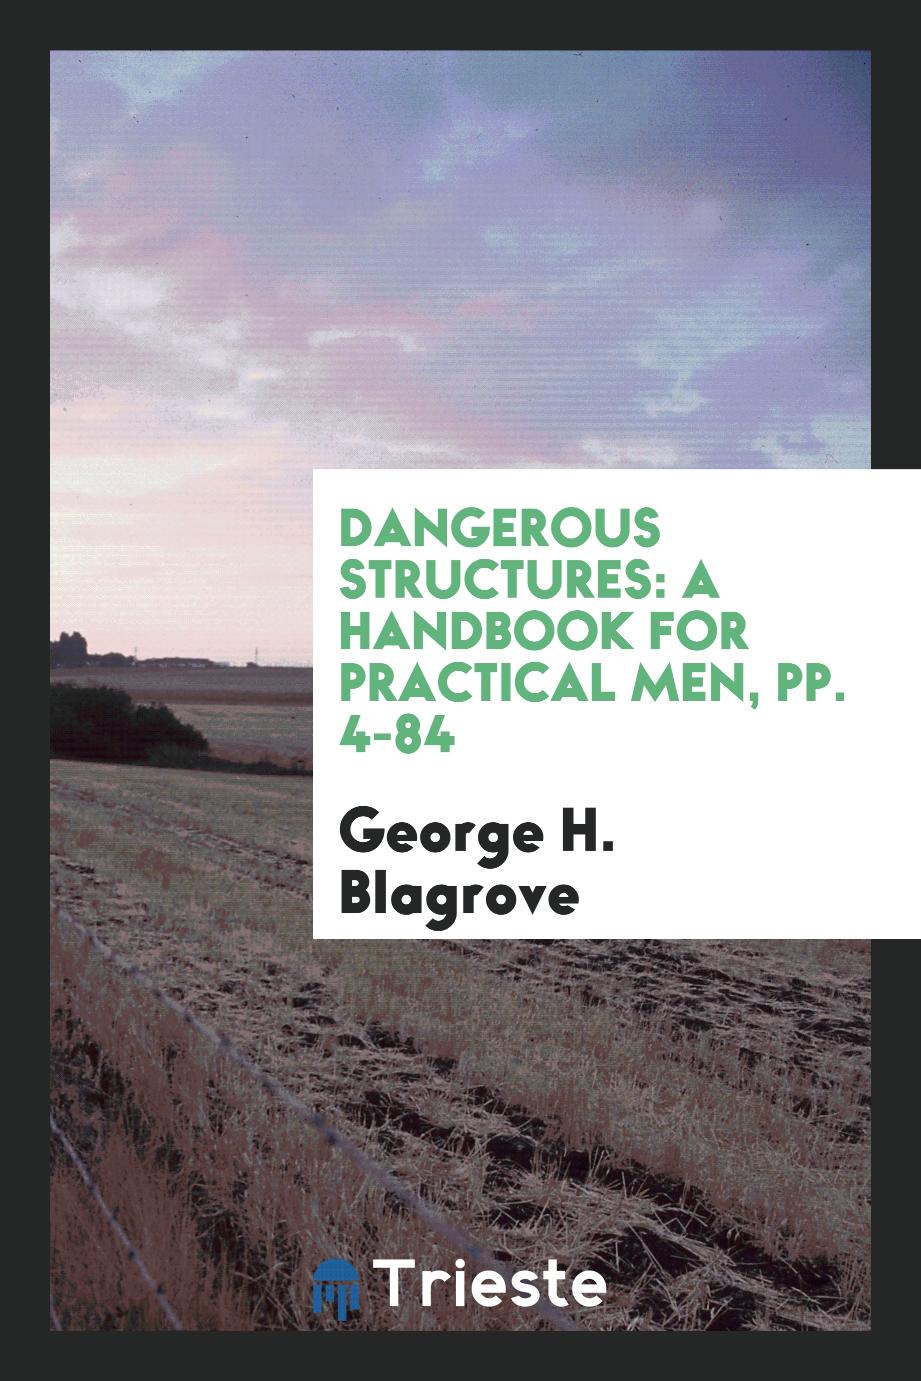 Dangerous Structures: A Handbook for Practical Men, pp. 4-84